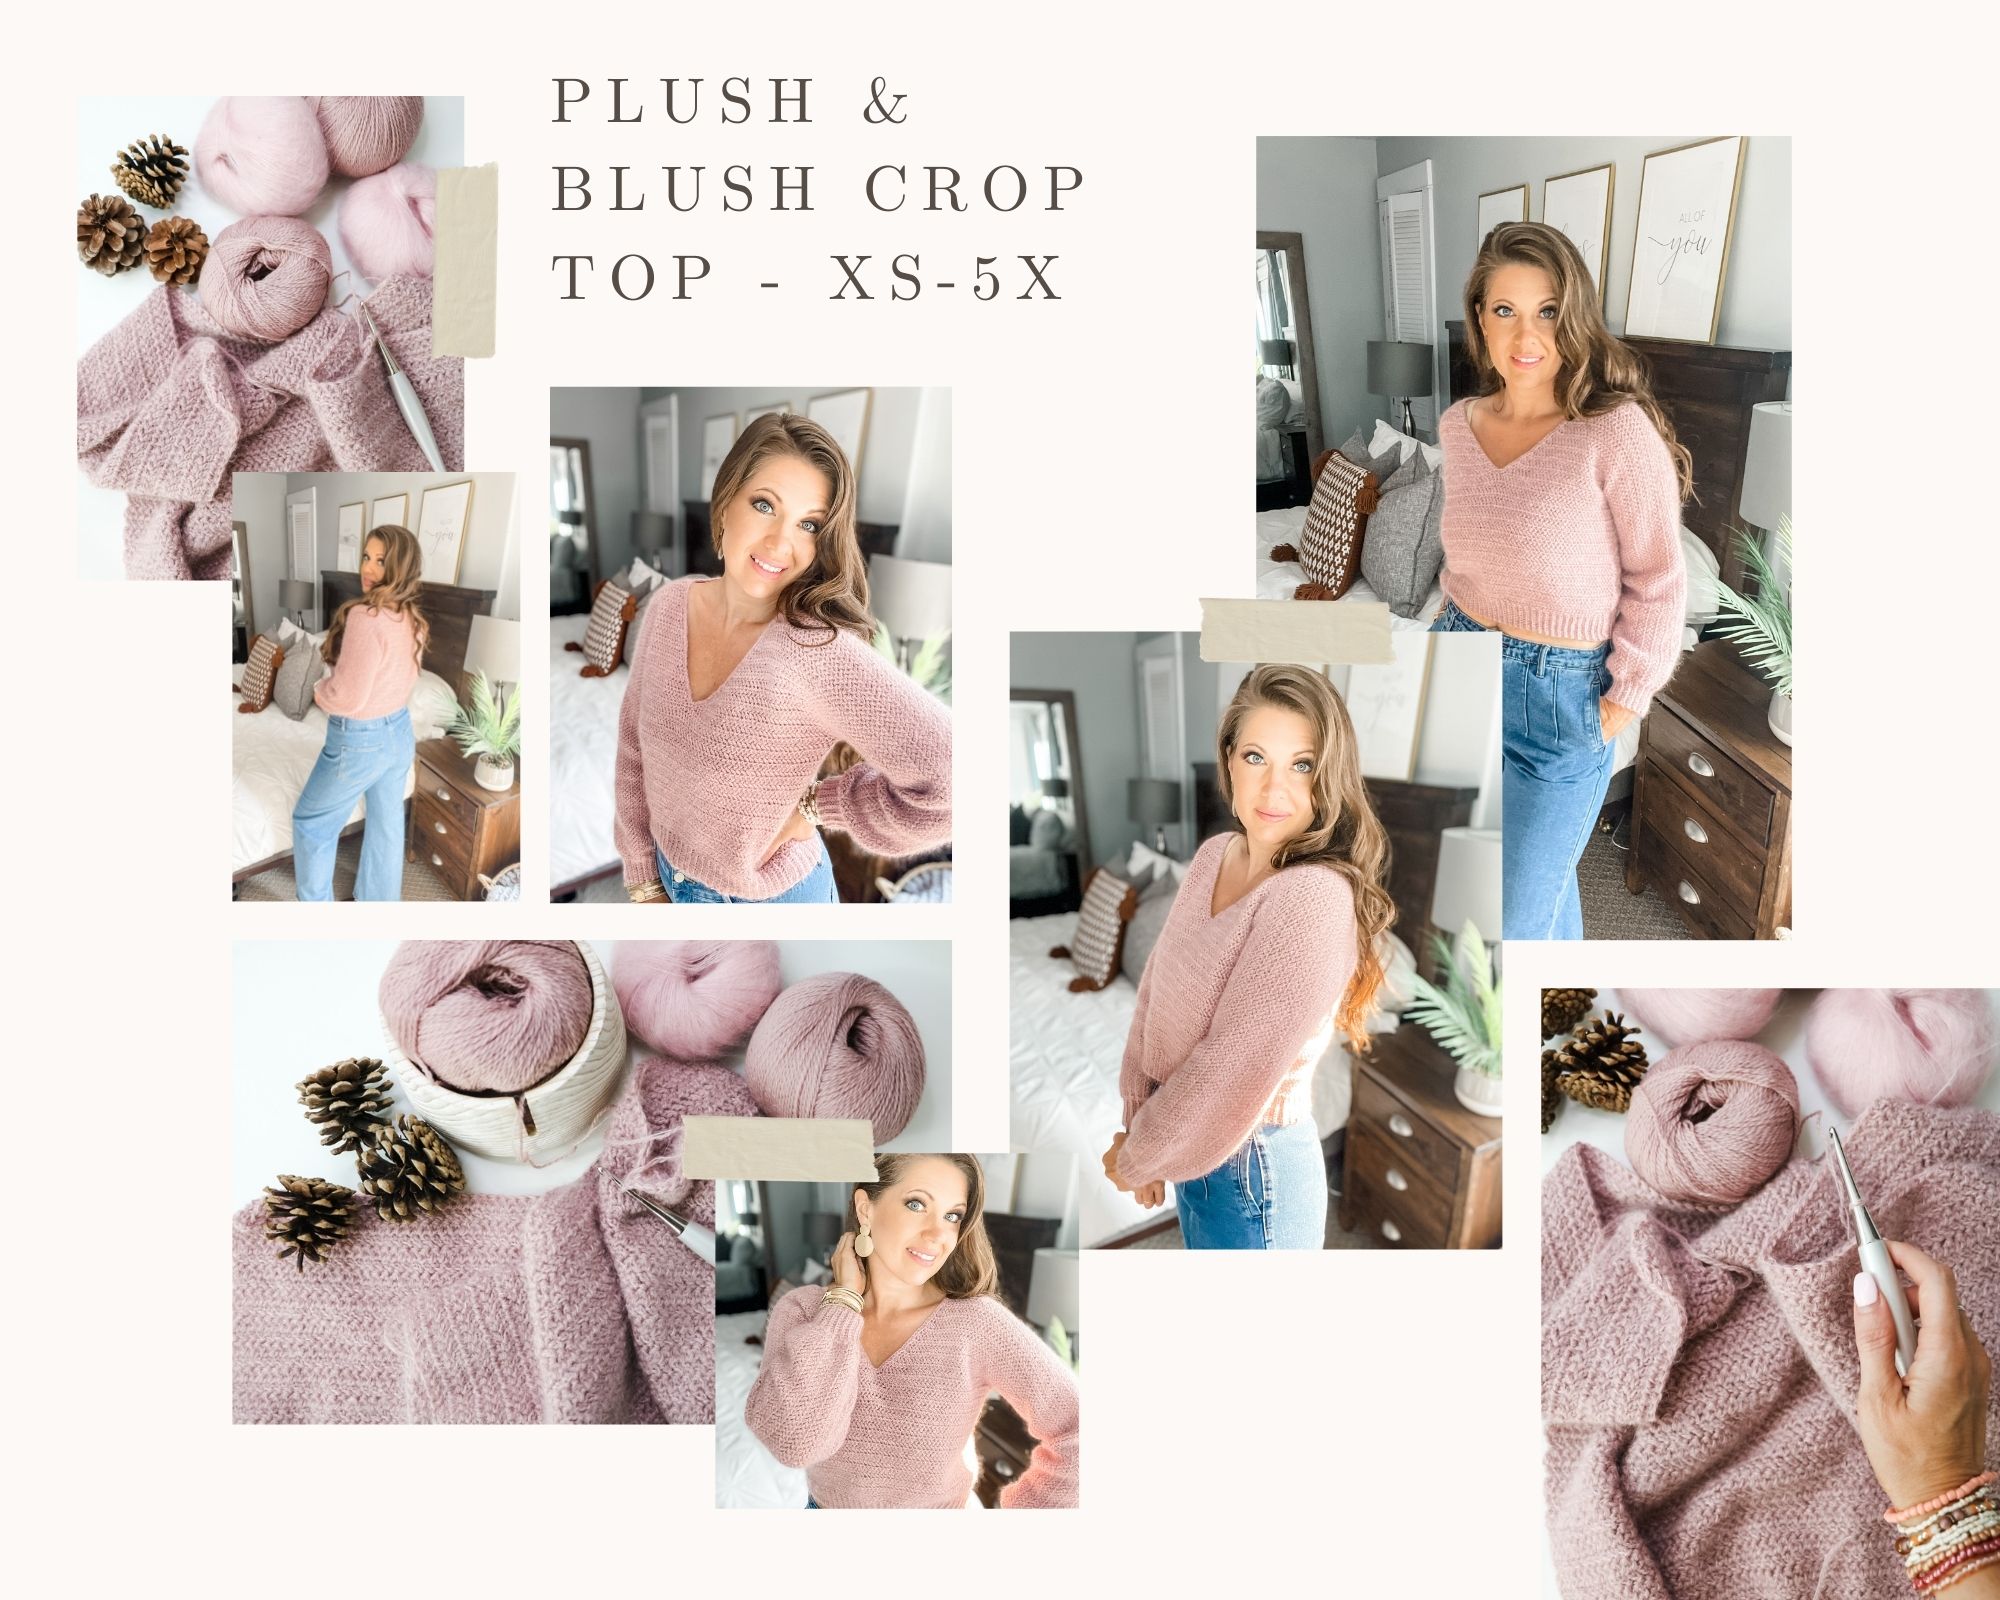 Plush & Blush Crop Top - Crochet Pattern - MJ's off the Hook Designs